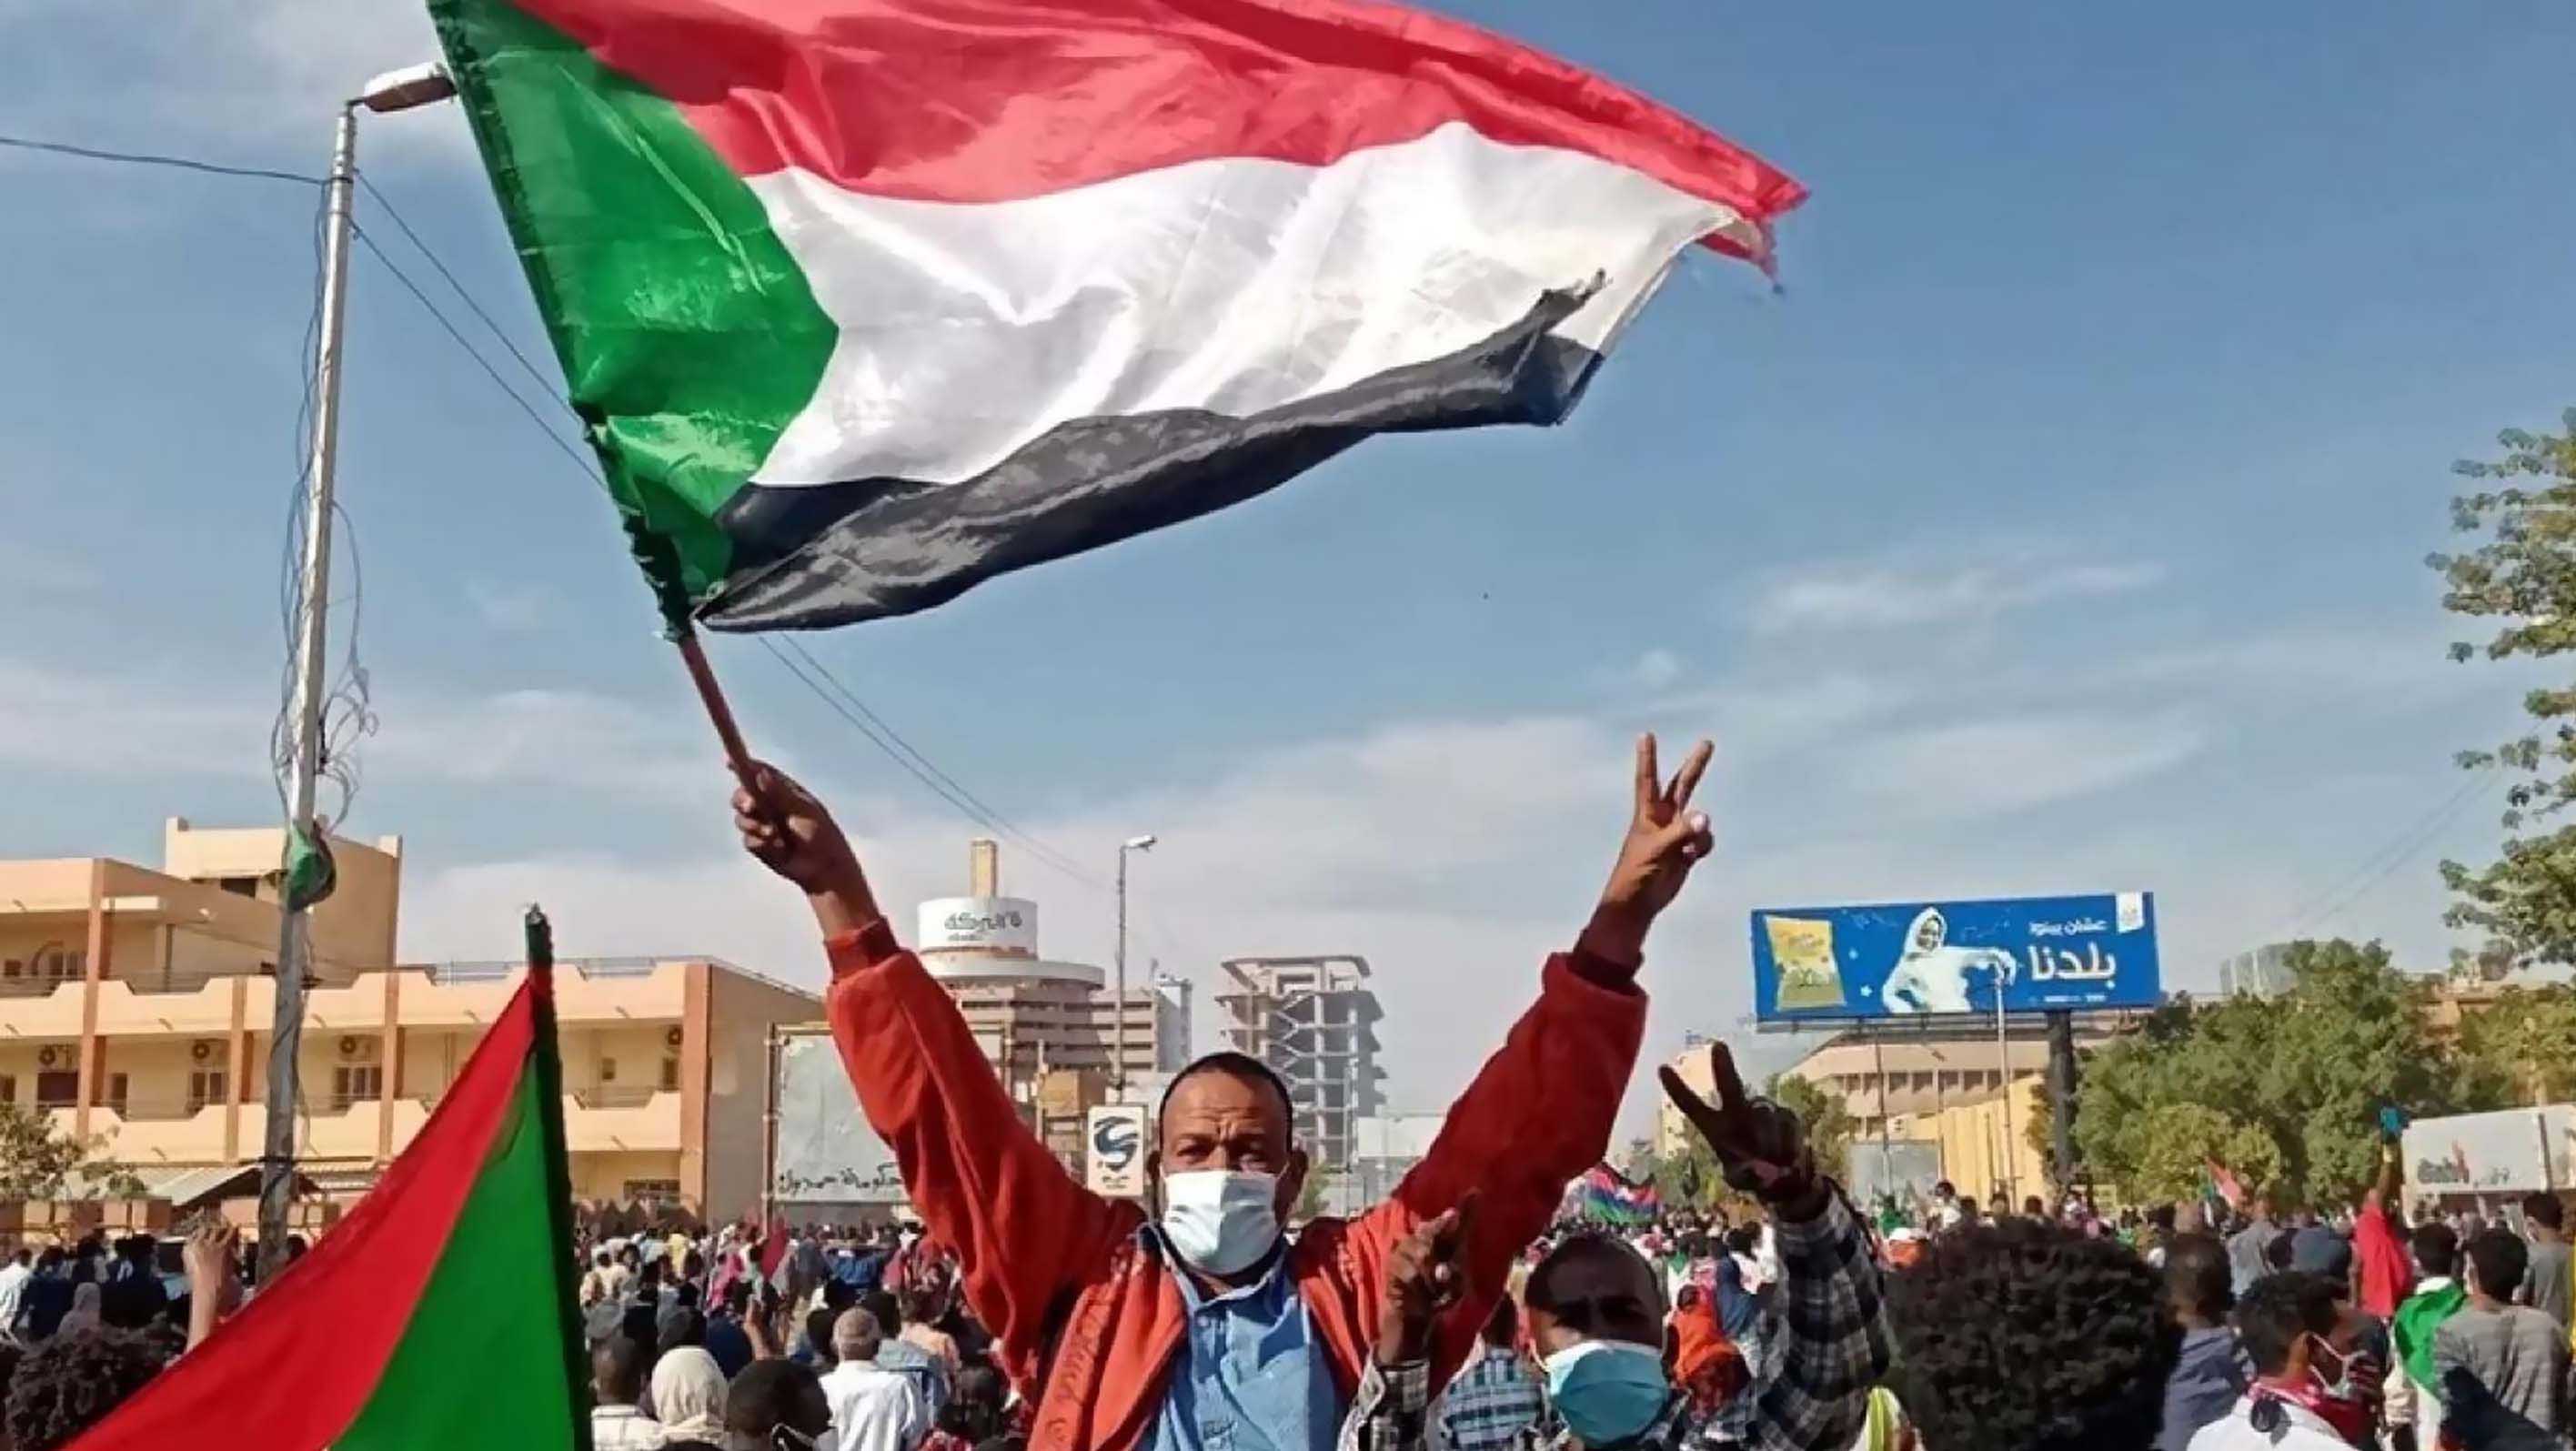 Mrs. Karman warns Sudanese political forces of perils of backing militia leader for democratic change